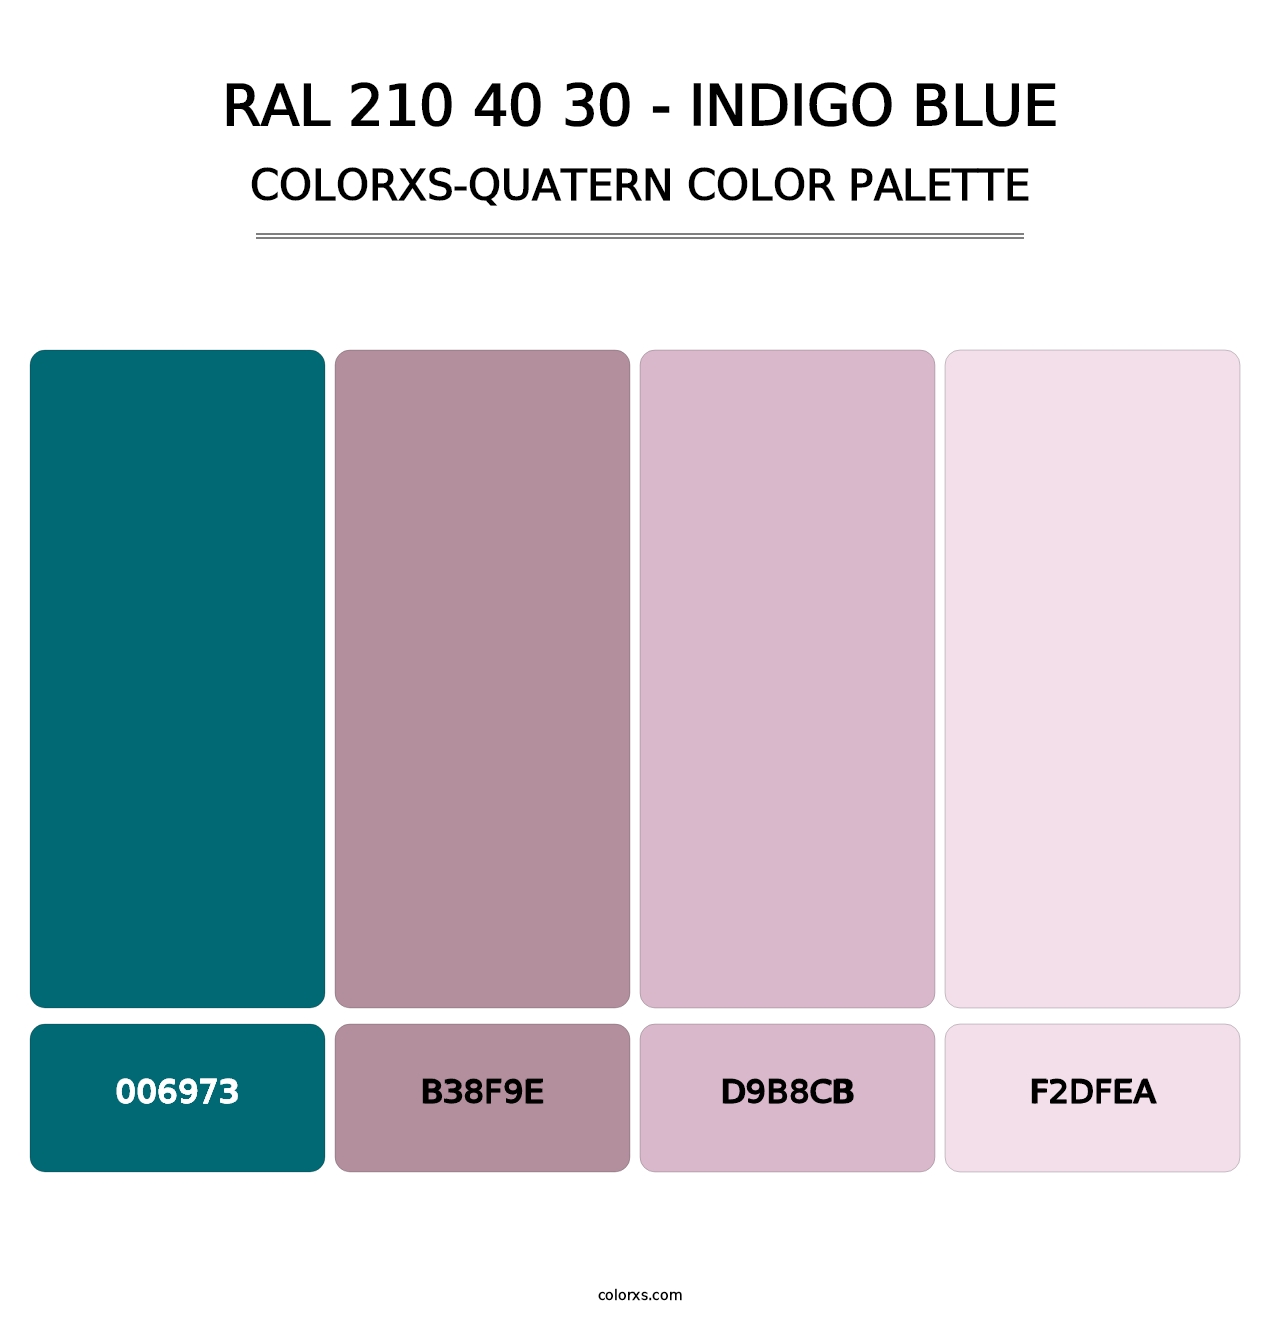 RAL 210 40 30 - Indigo Blue - Colorxs Quatern Palette